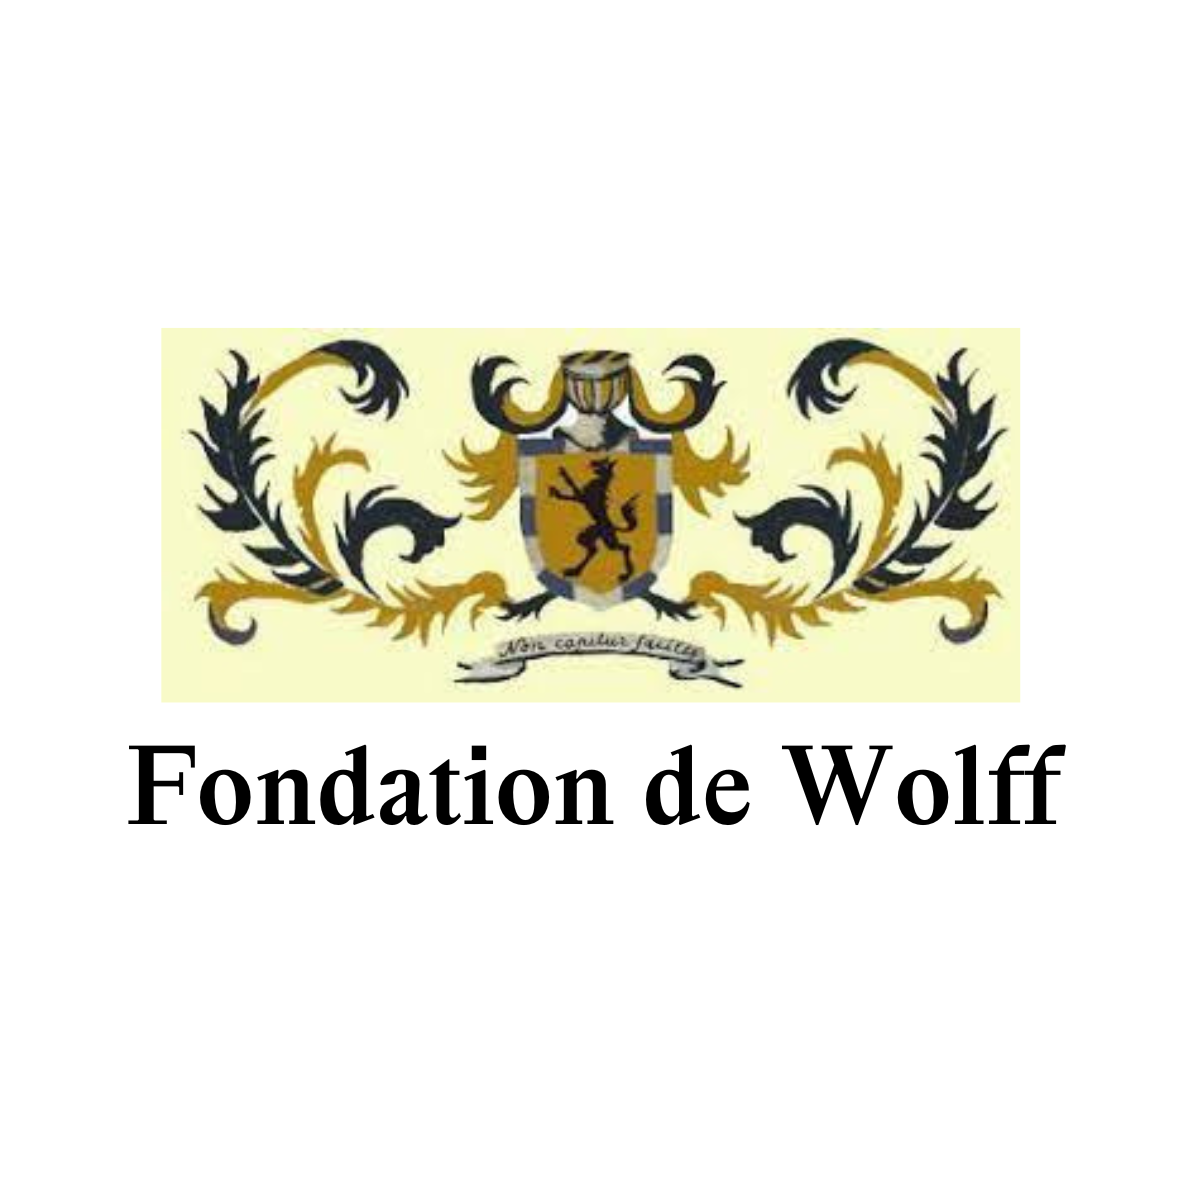 Fondation de Wolff